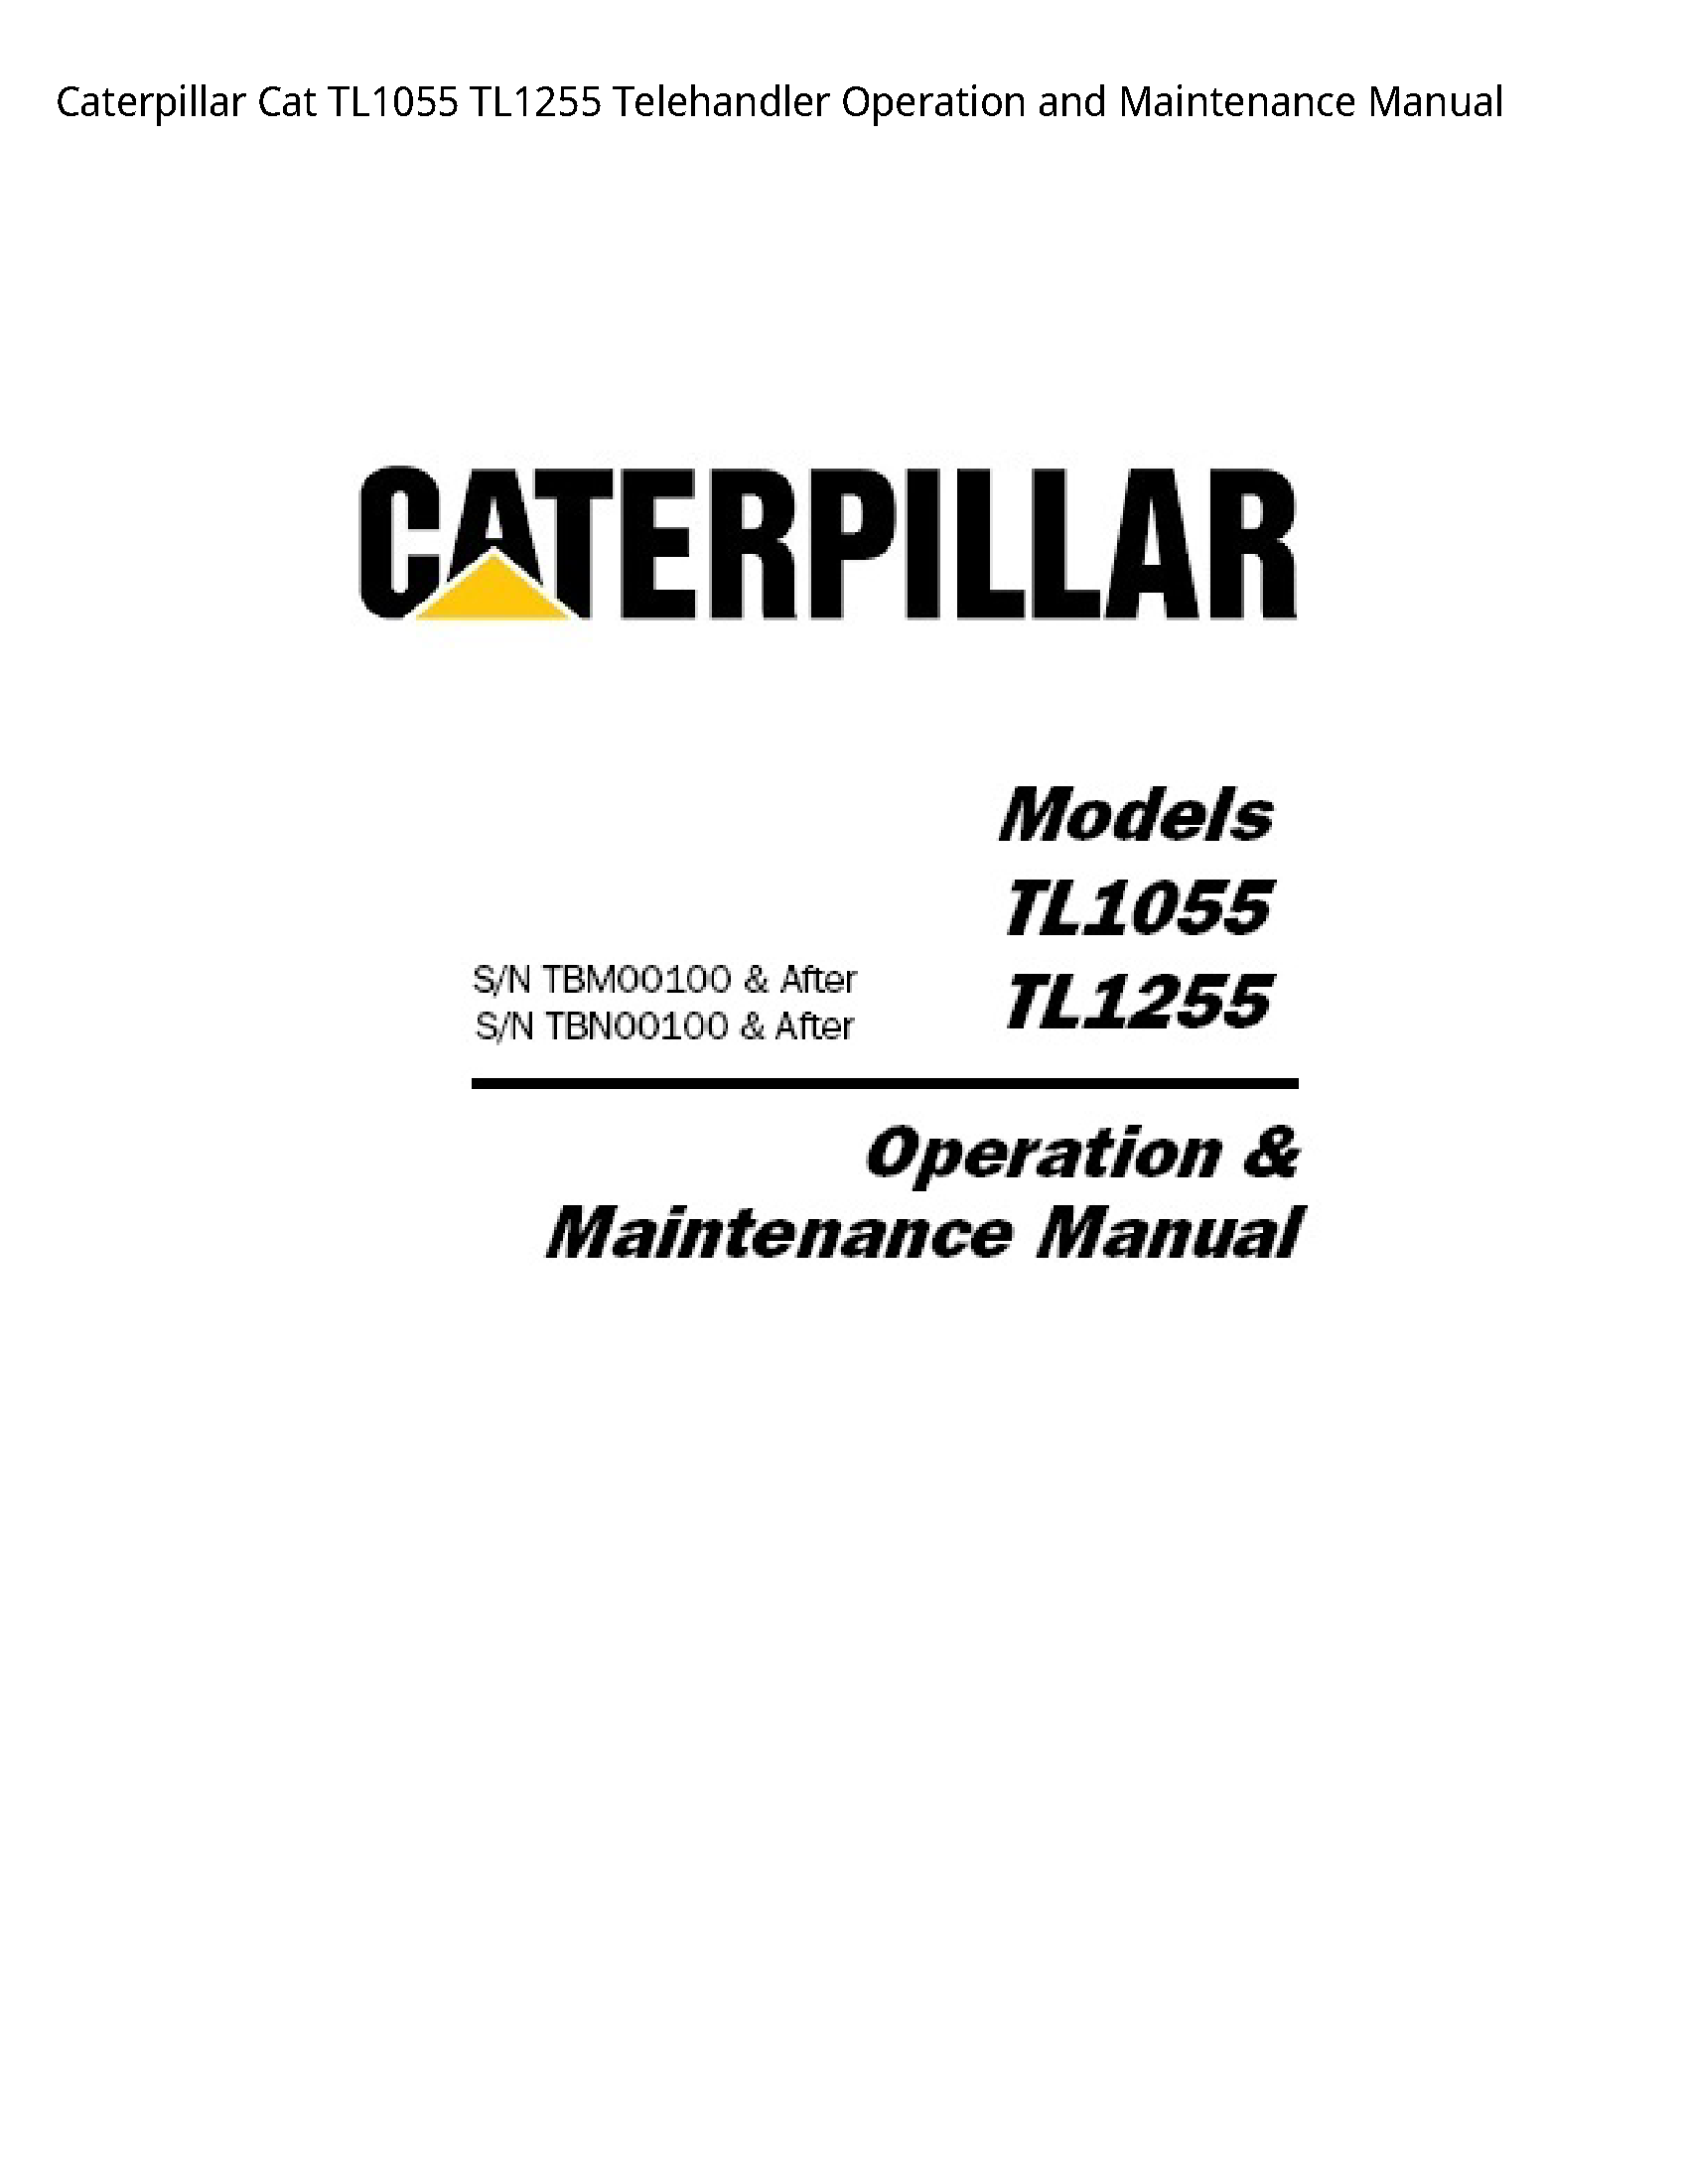 Caterpillar TL1055 Cat Telehandler Operation  Maintenance manual